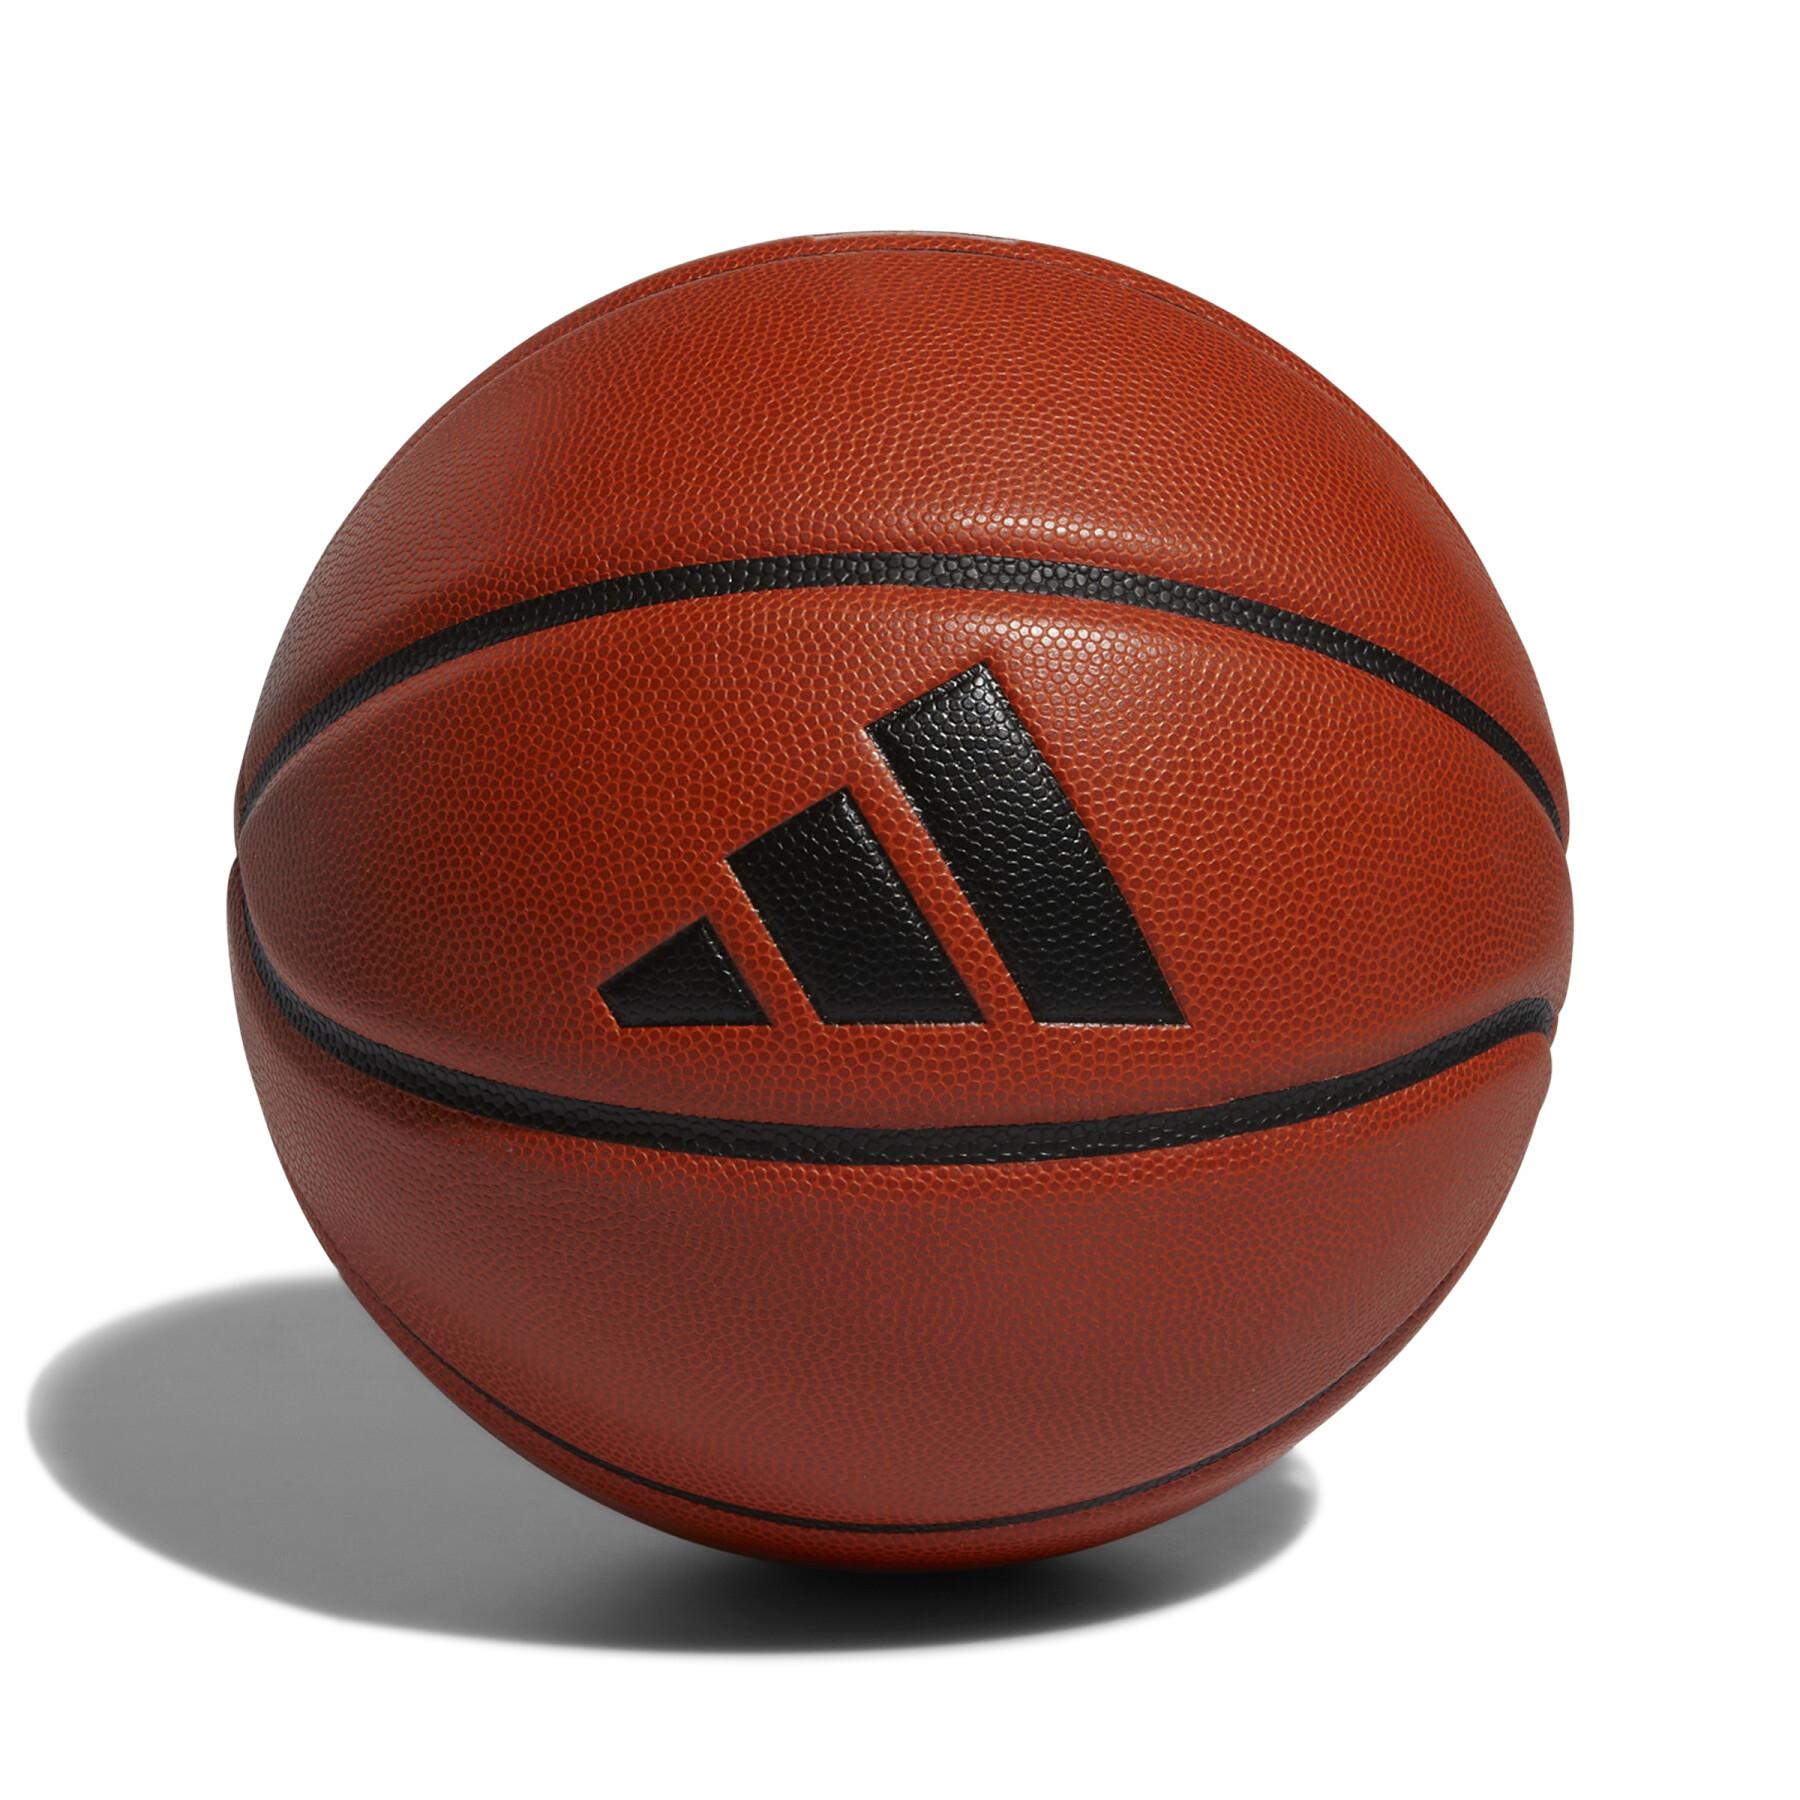 Piłka do koszykówki adidas Pro 3.0 Official Game